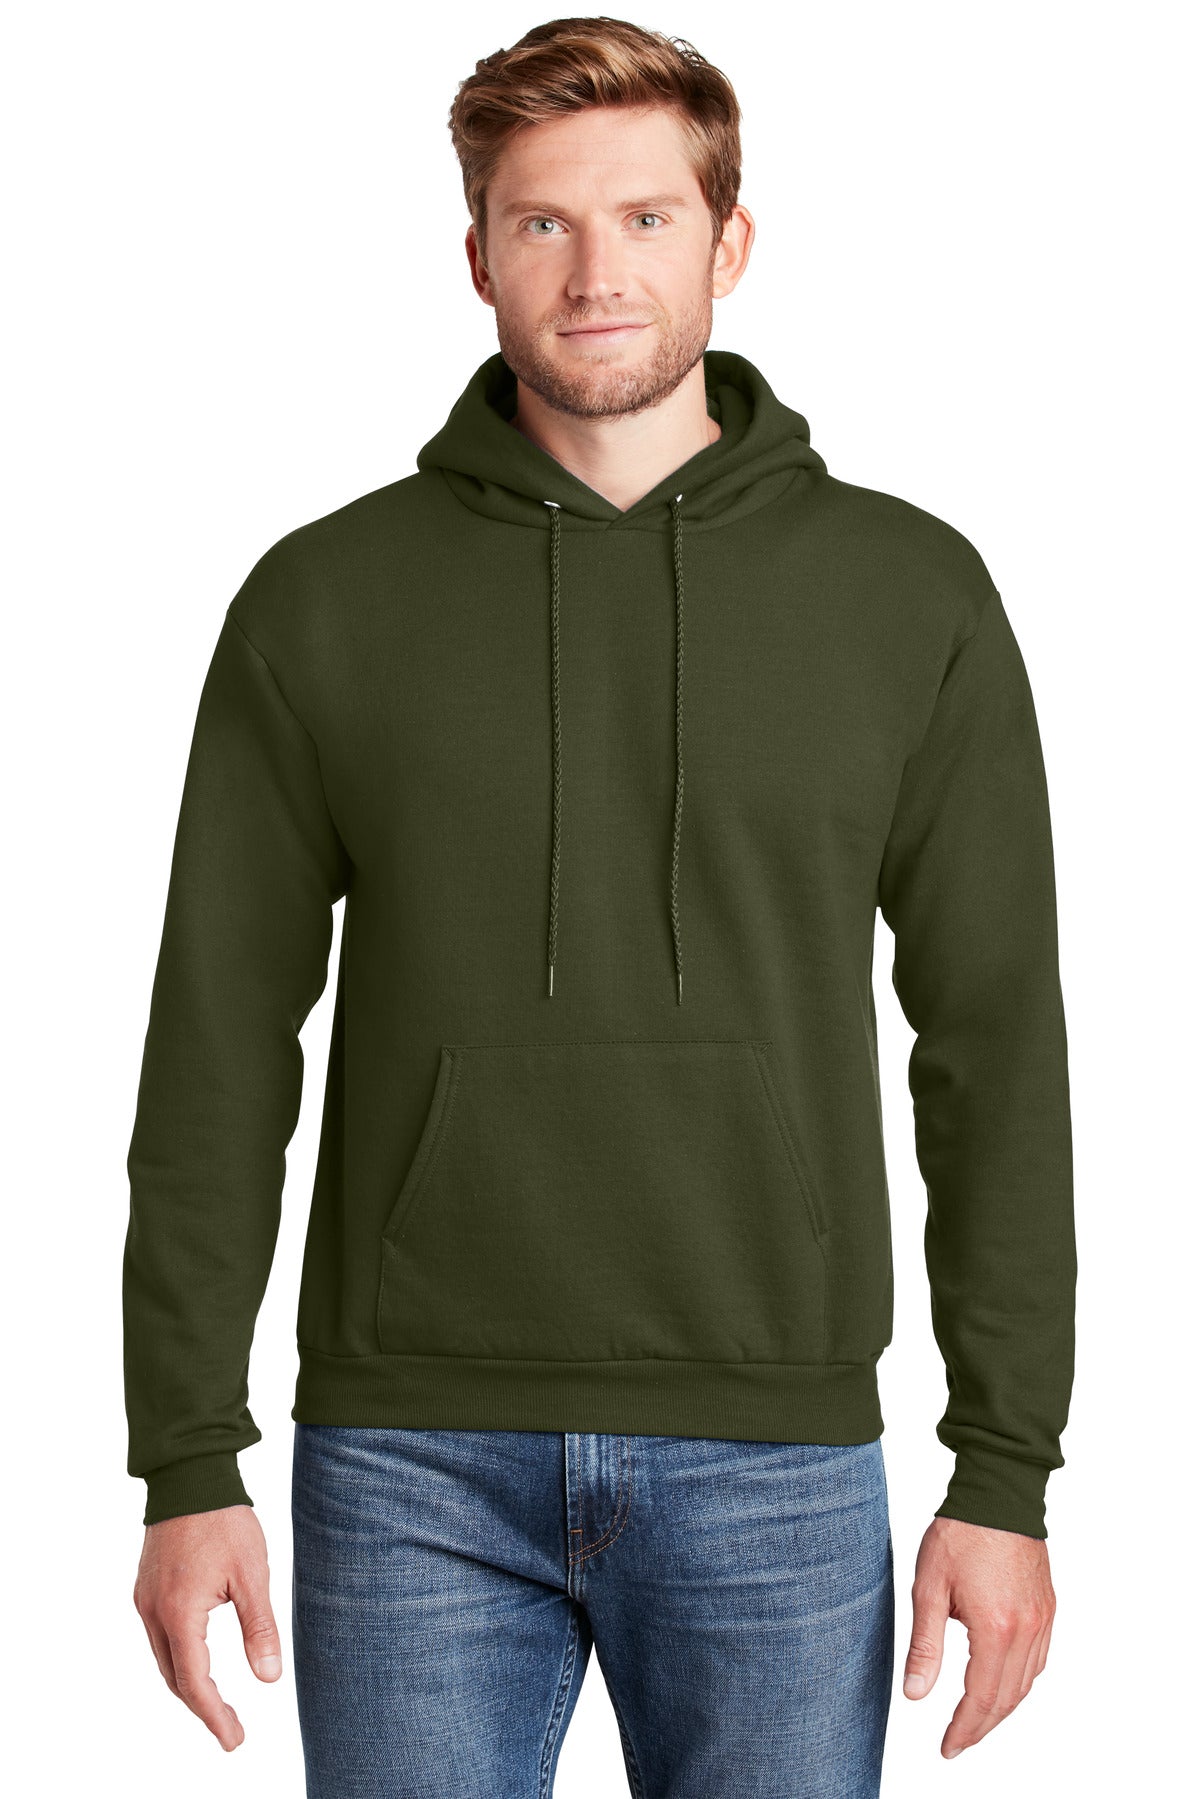 Sweatshirts/Fleece Fatigue Green Hanes